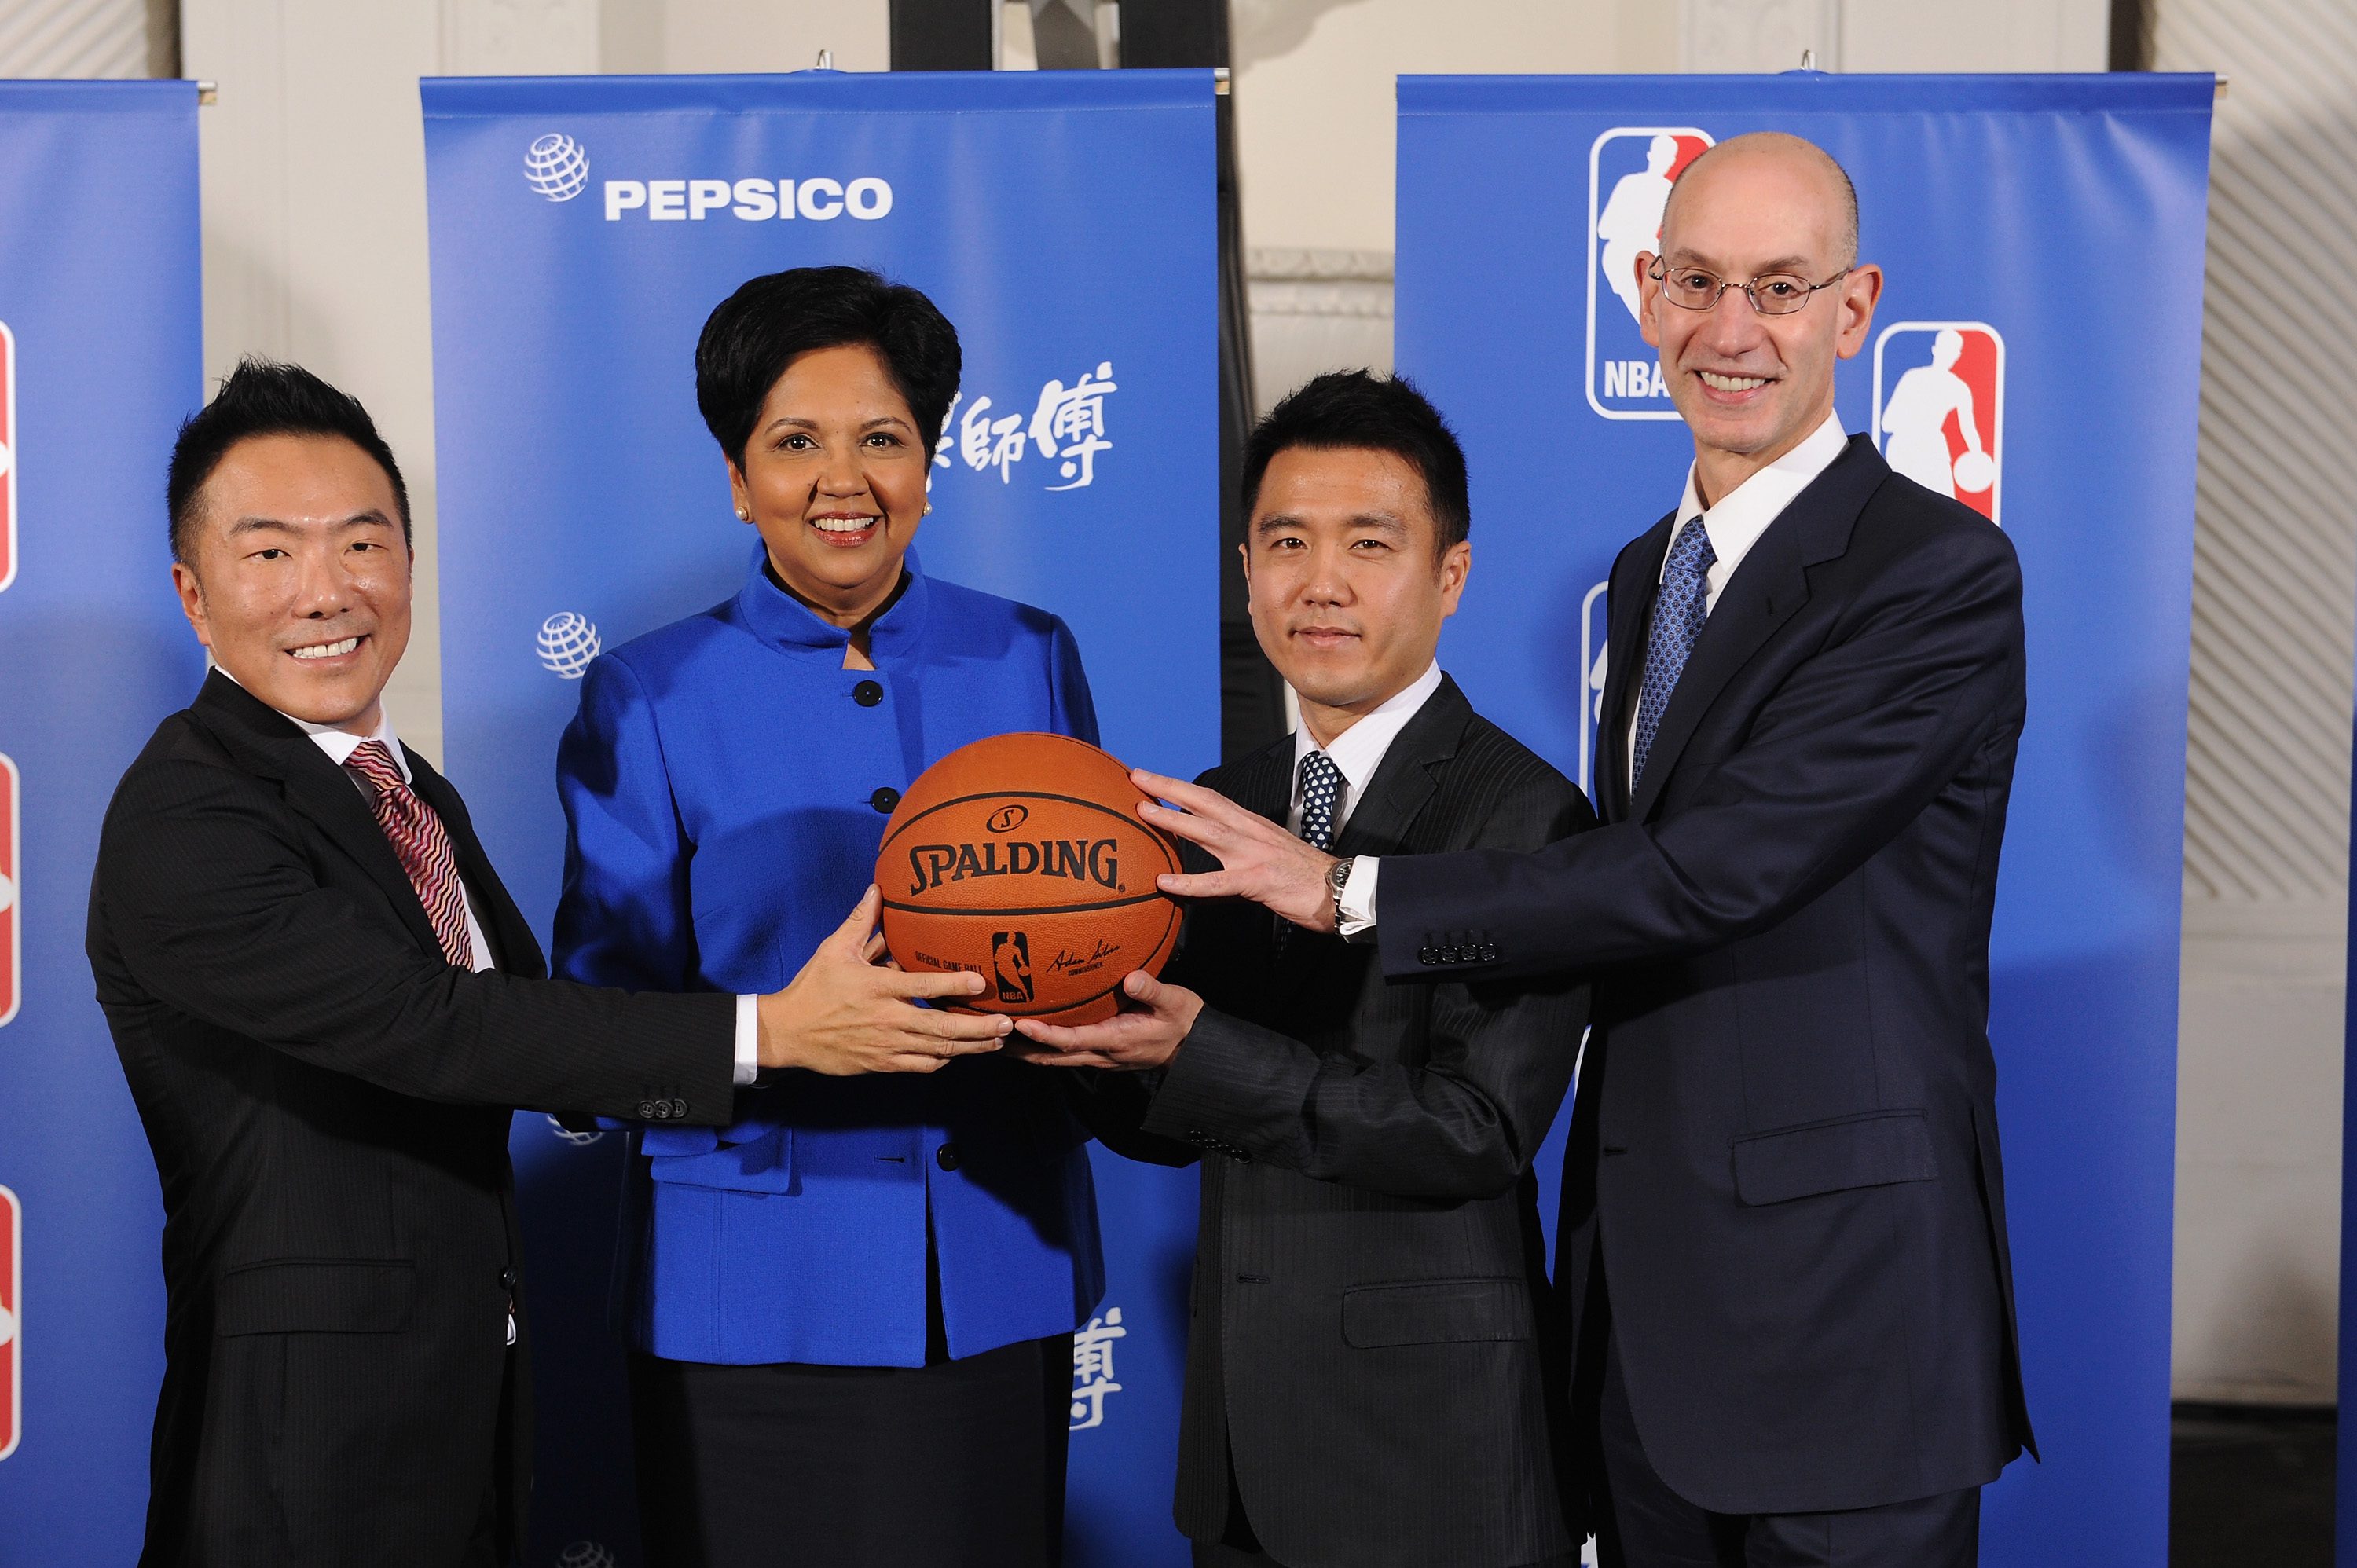 PepsiCo NBA Press Event with Athletes/Celebrities